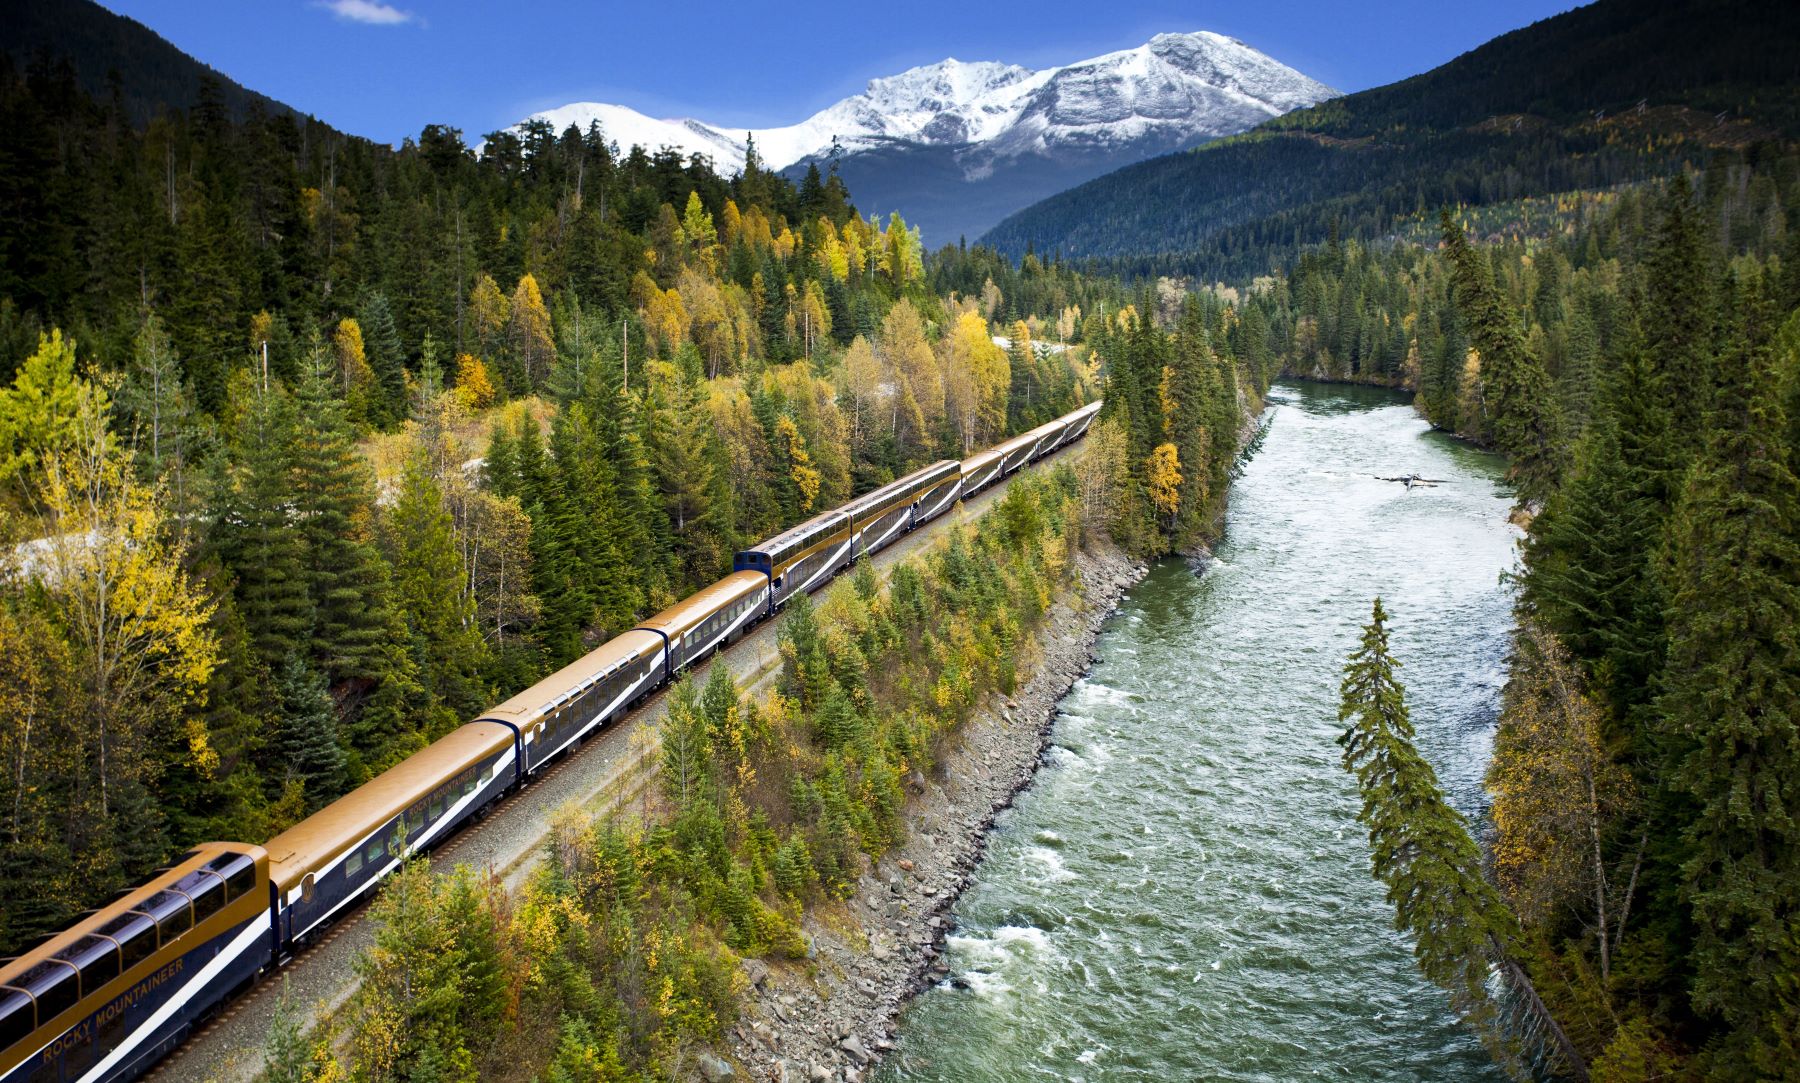 train trips across the canadian rockies